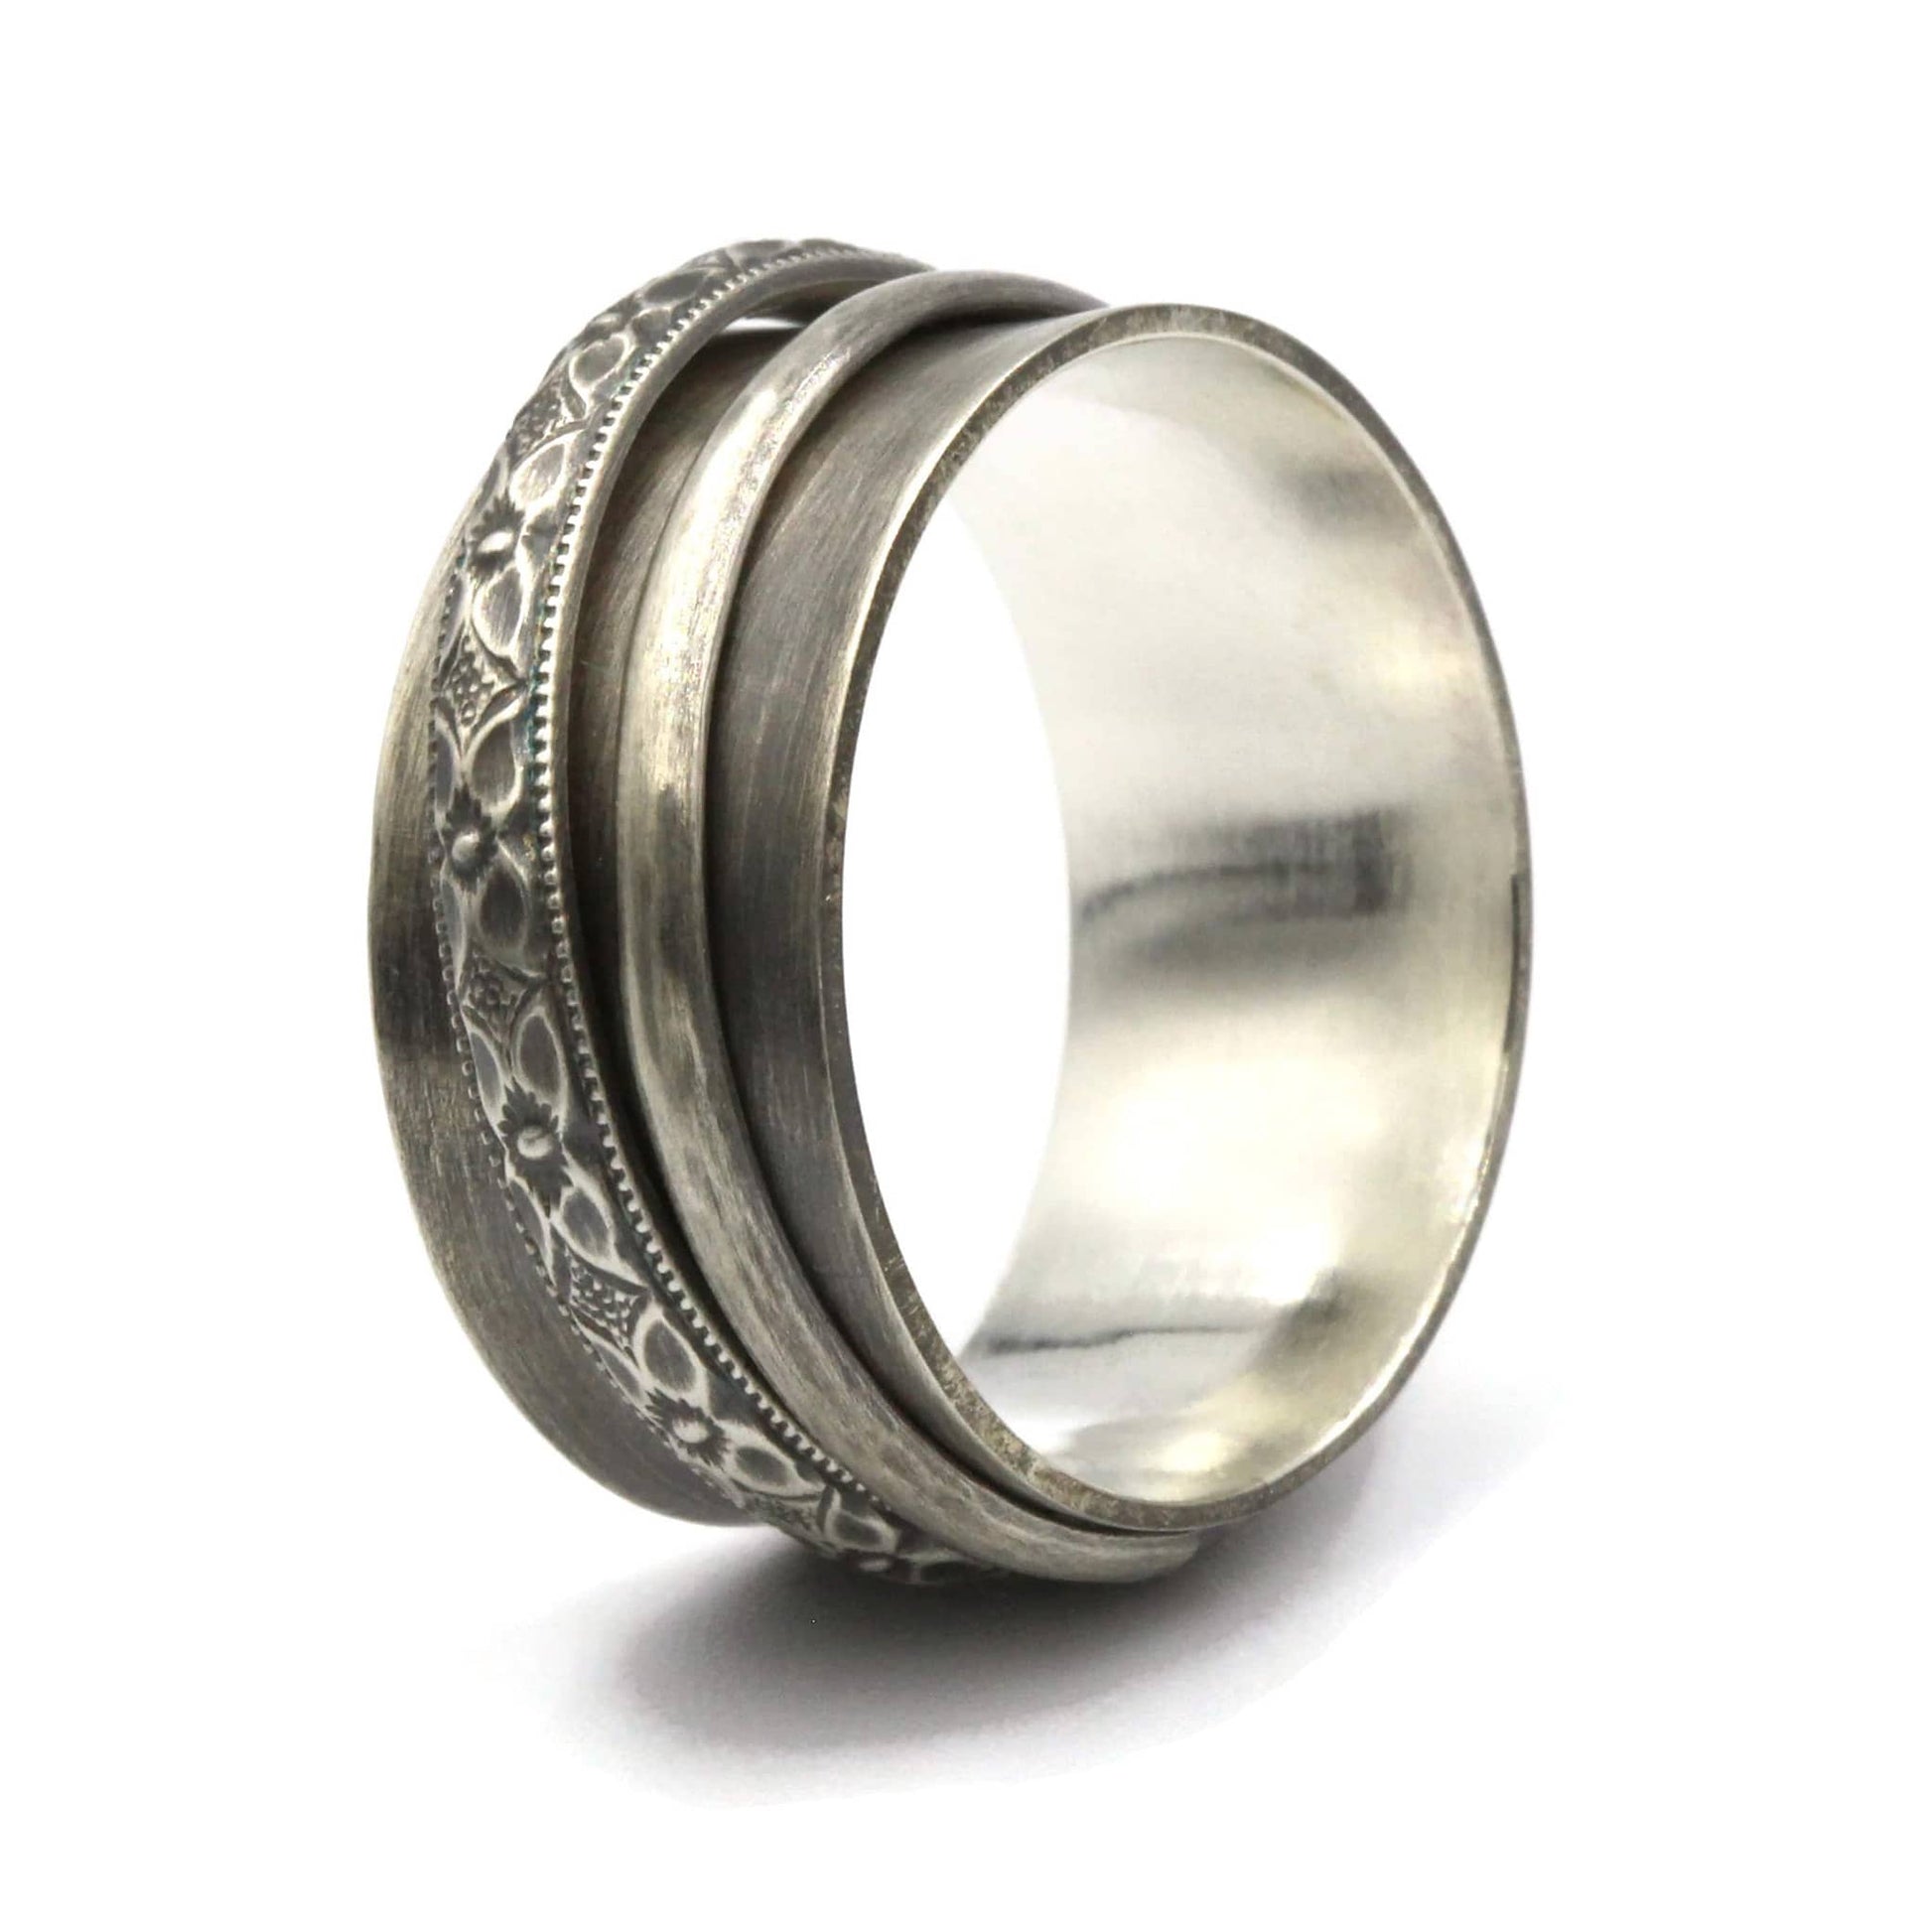 Sterling Silver Fidget Ring with Flower Pattern - Rebecca Cordingley Jewellery